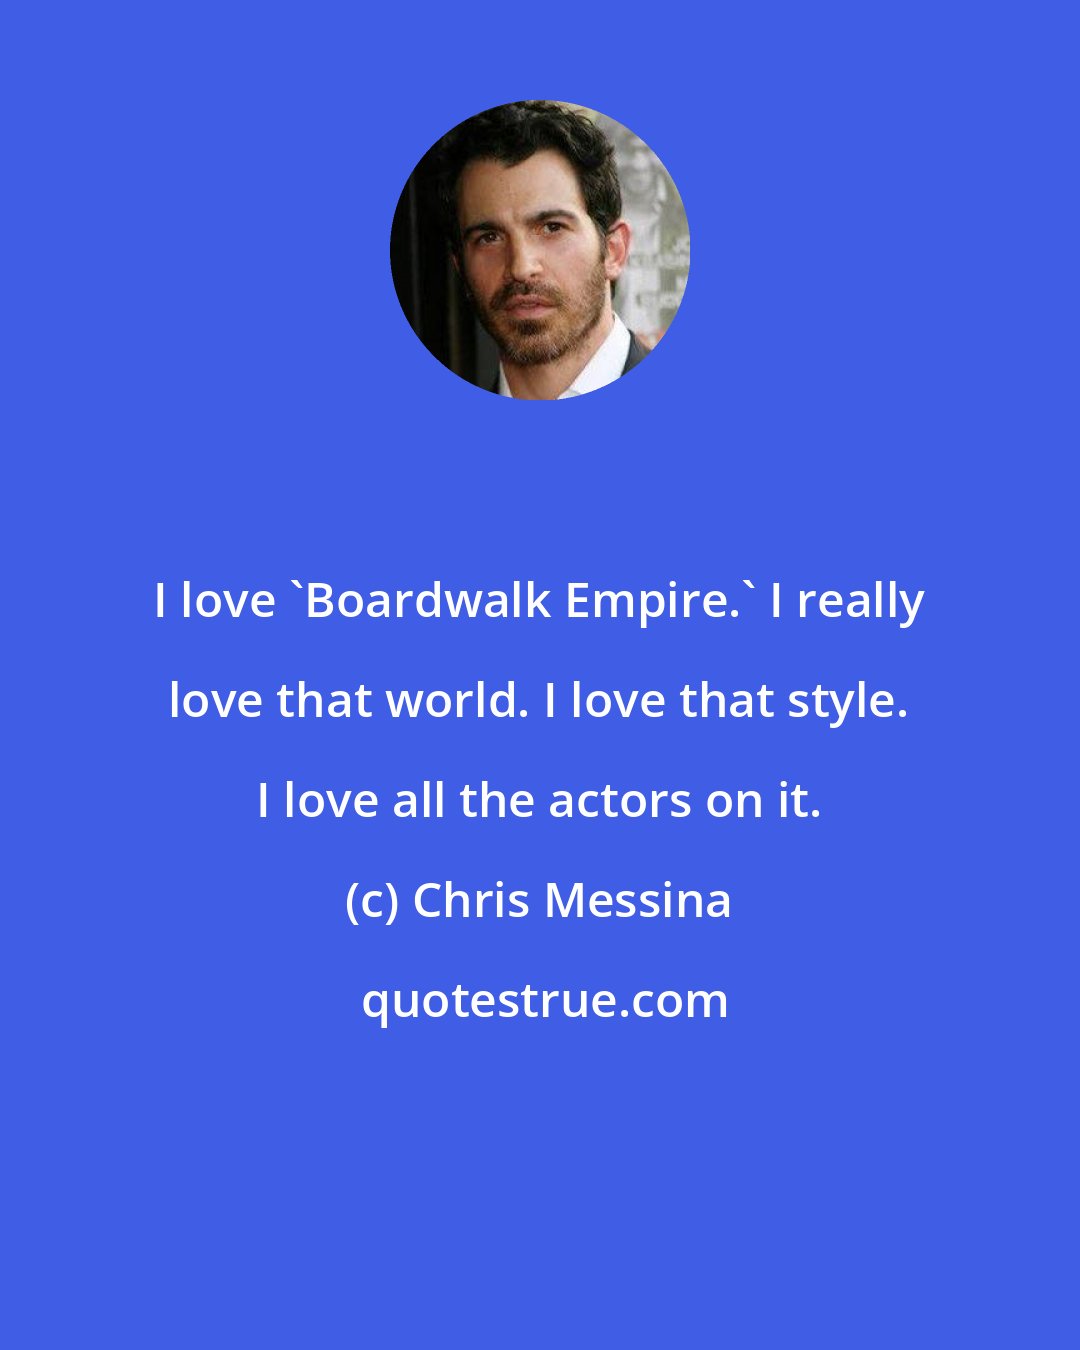 Chris Messina: I love 'Boardwalk Empire.' I really love that world. I love that style. I love all the actors on it.